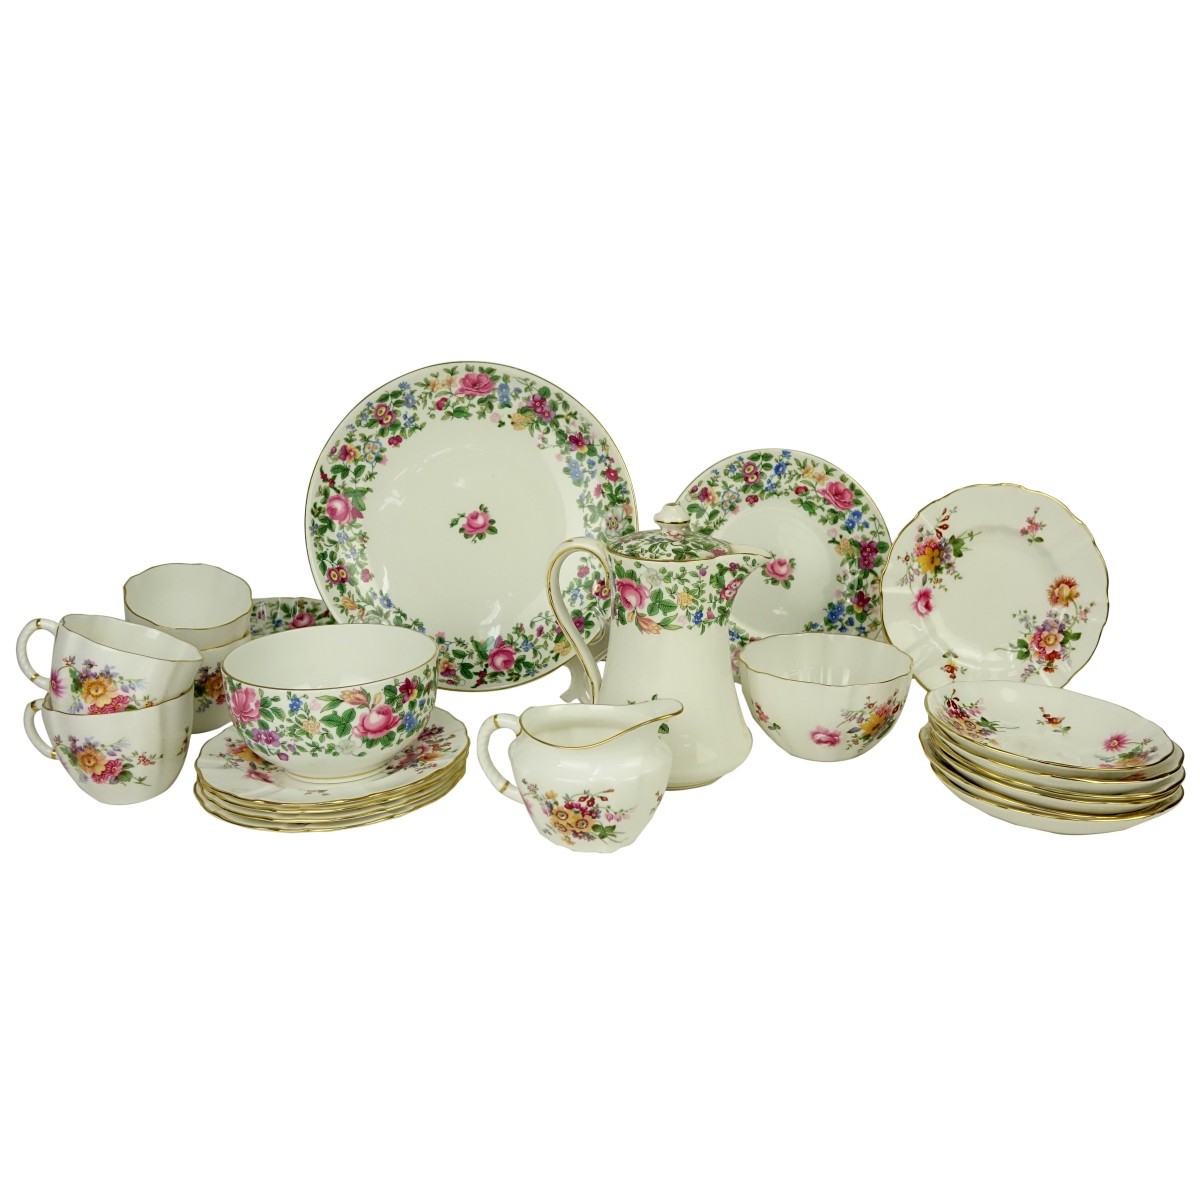 Assortment of Vintage English Porcelain Dinnerware